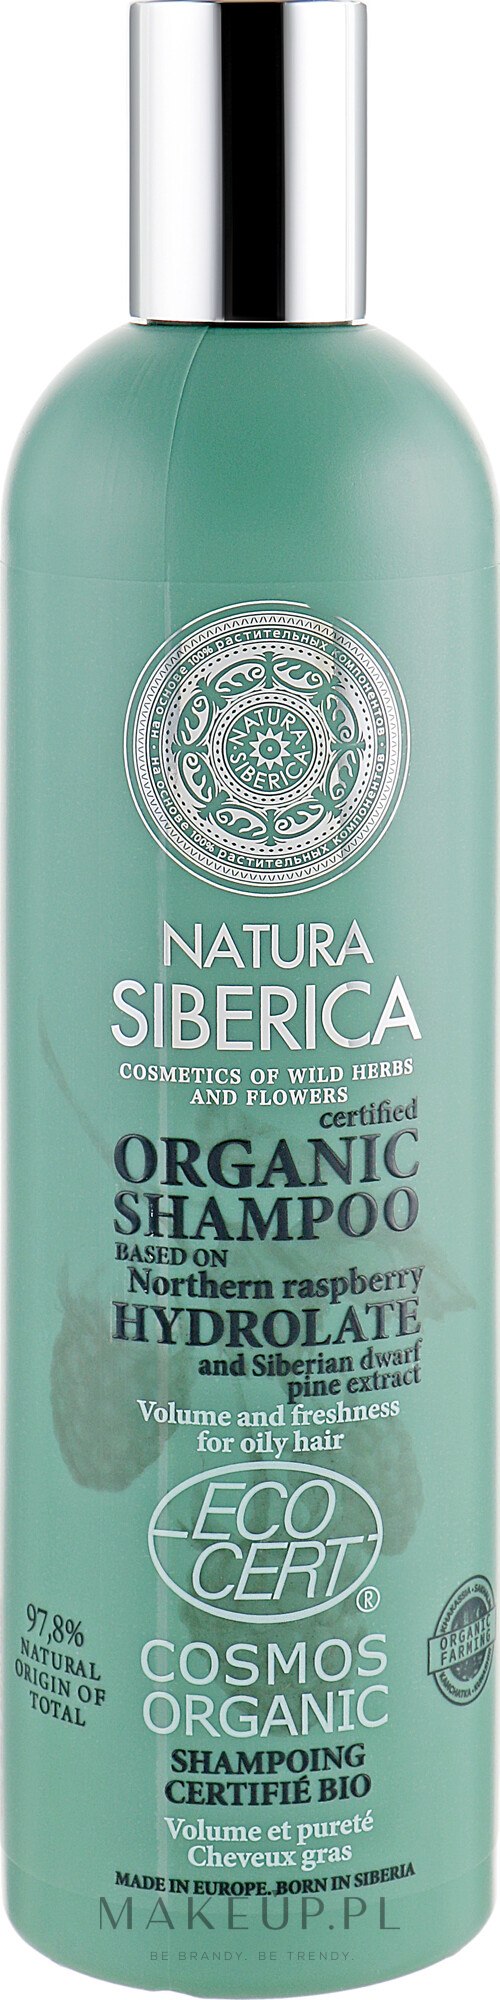 natura siberica wizaz szampon